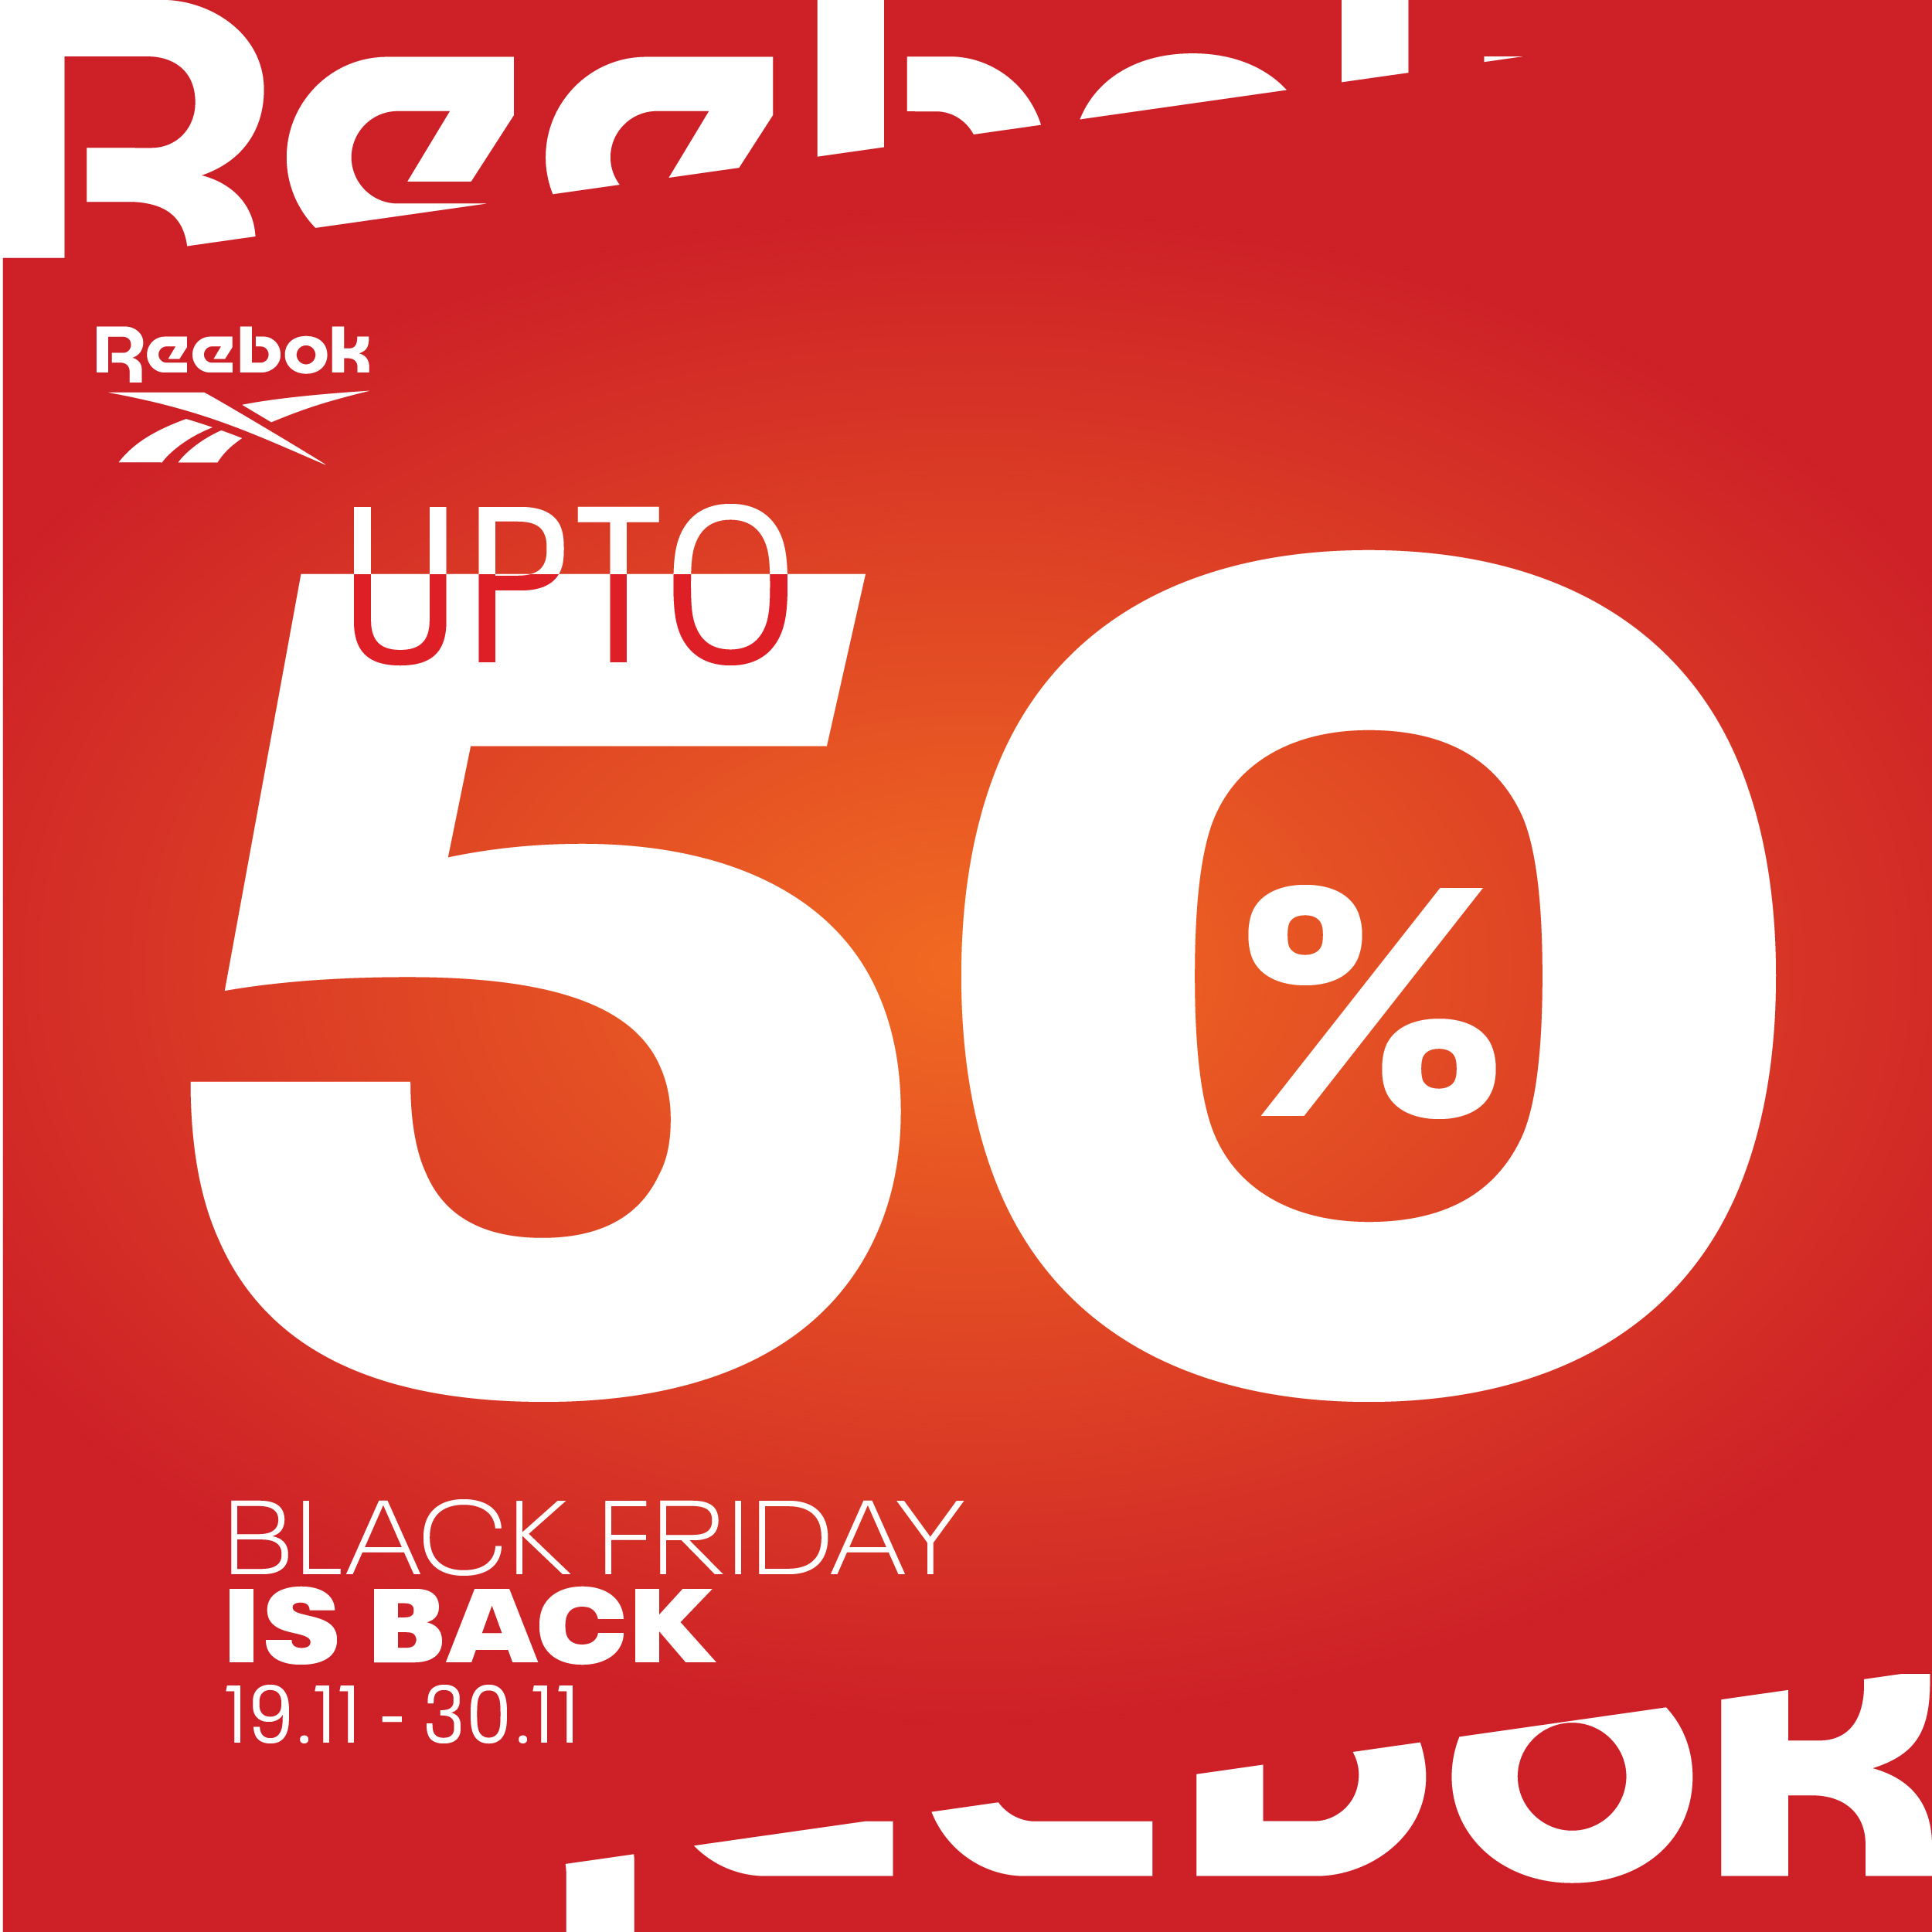 REEBOK BLACK FRIDAY SUPER SALE UPTO 50%++